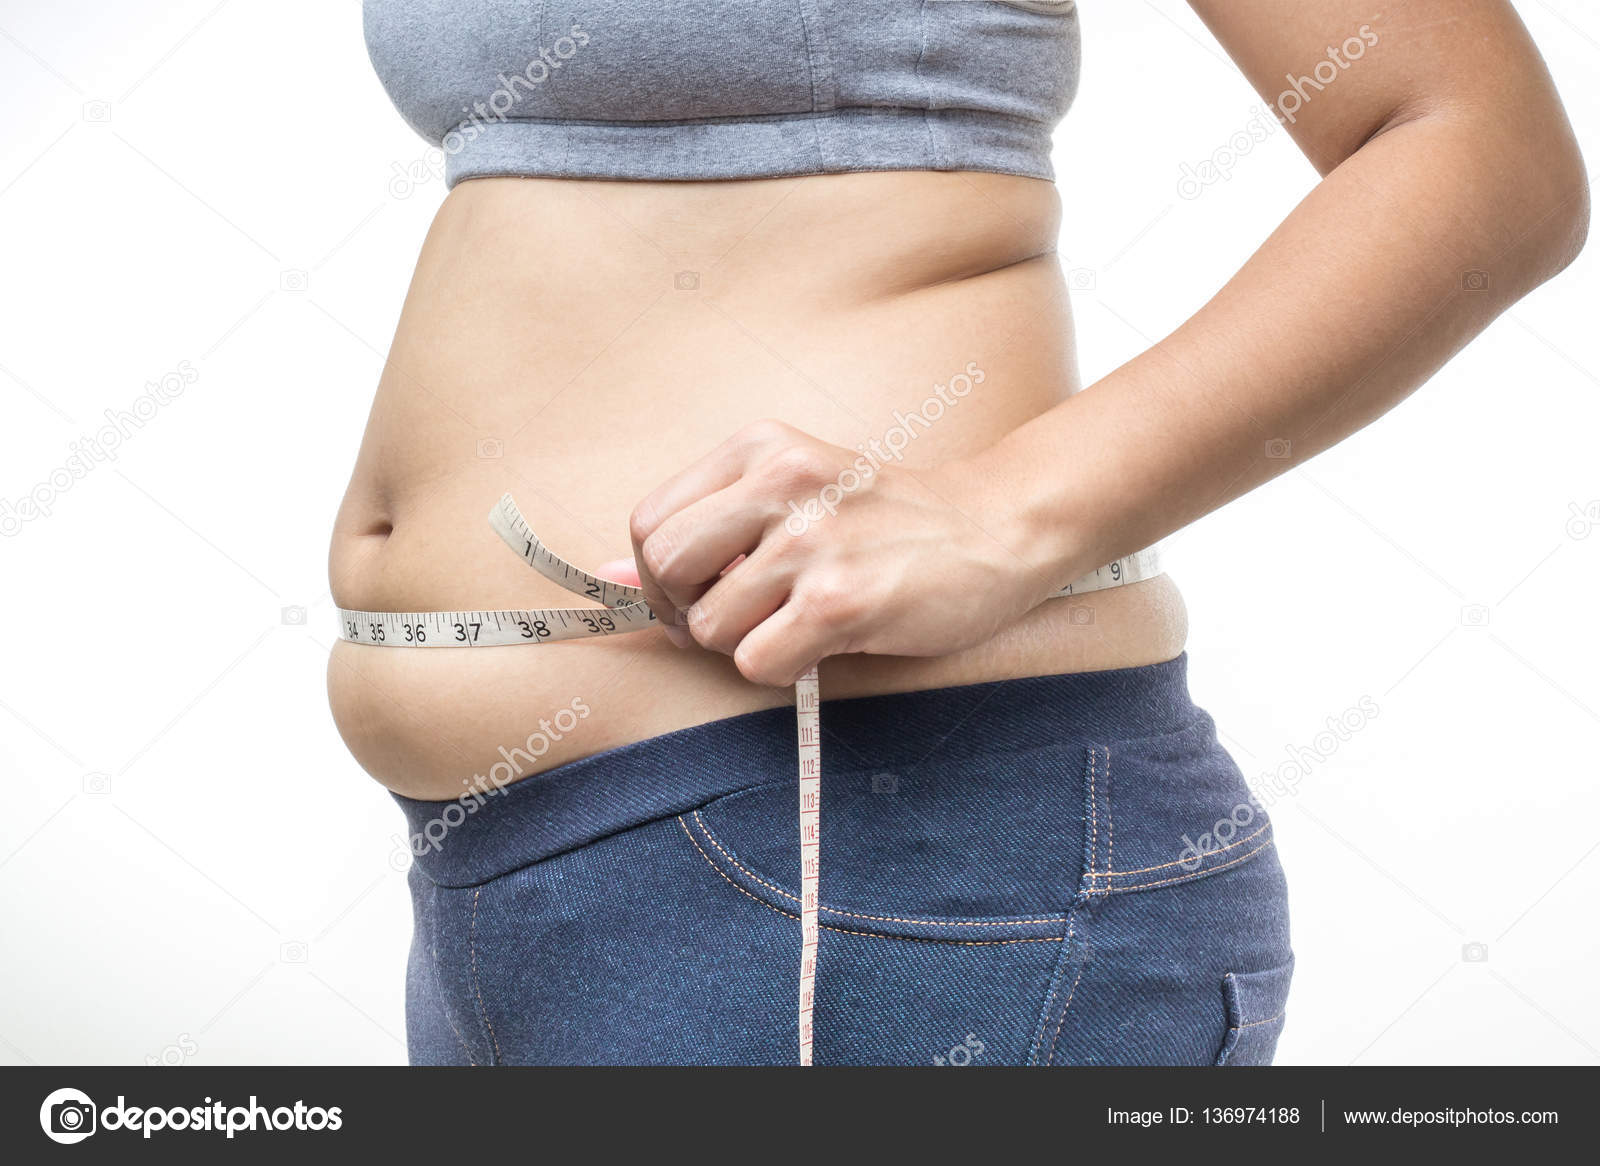 https://st3.depositphotos.com/10325516/13697/i/1600/depositphotos_136974188-stock-photo-overweight-woman-with-tape-measure.jpg